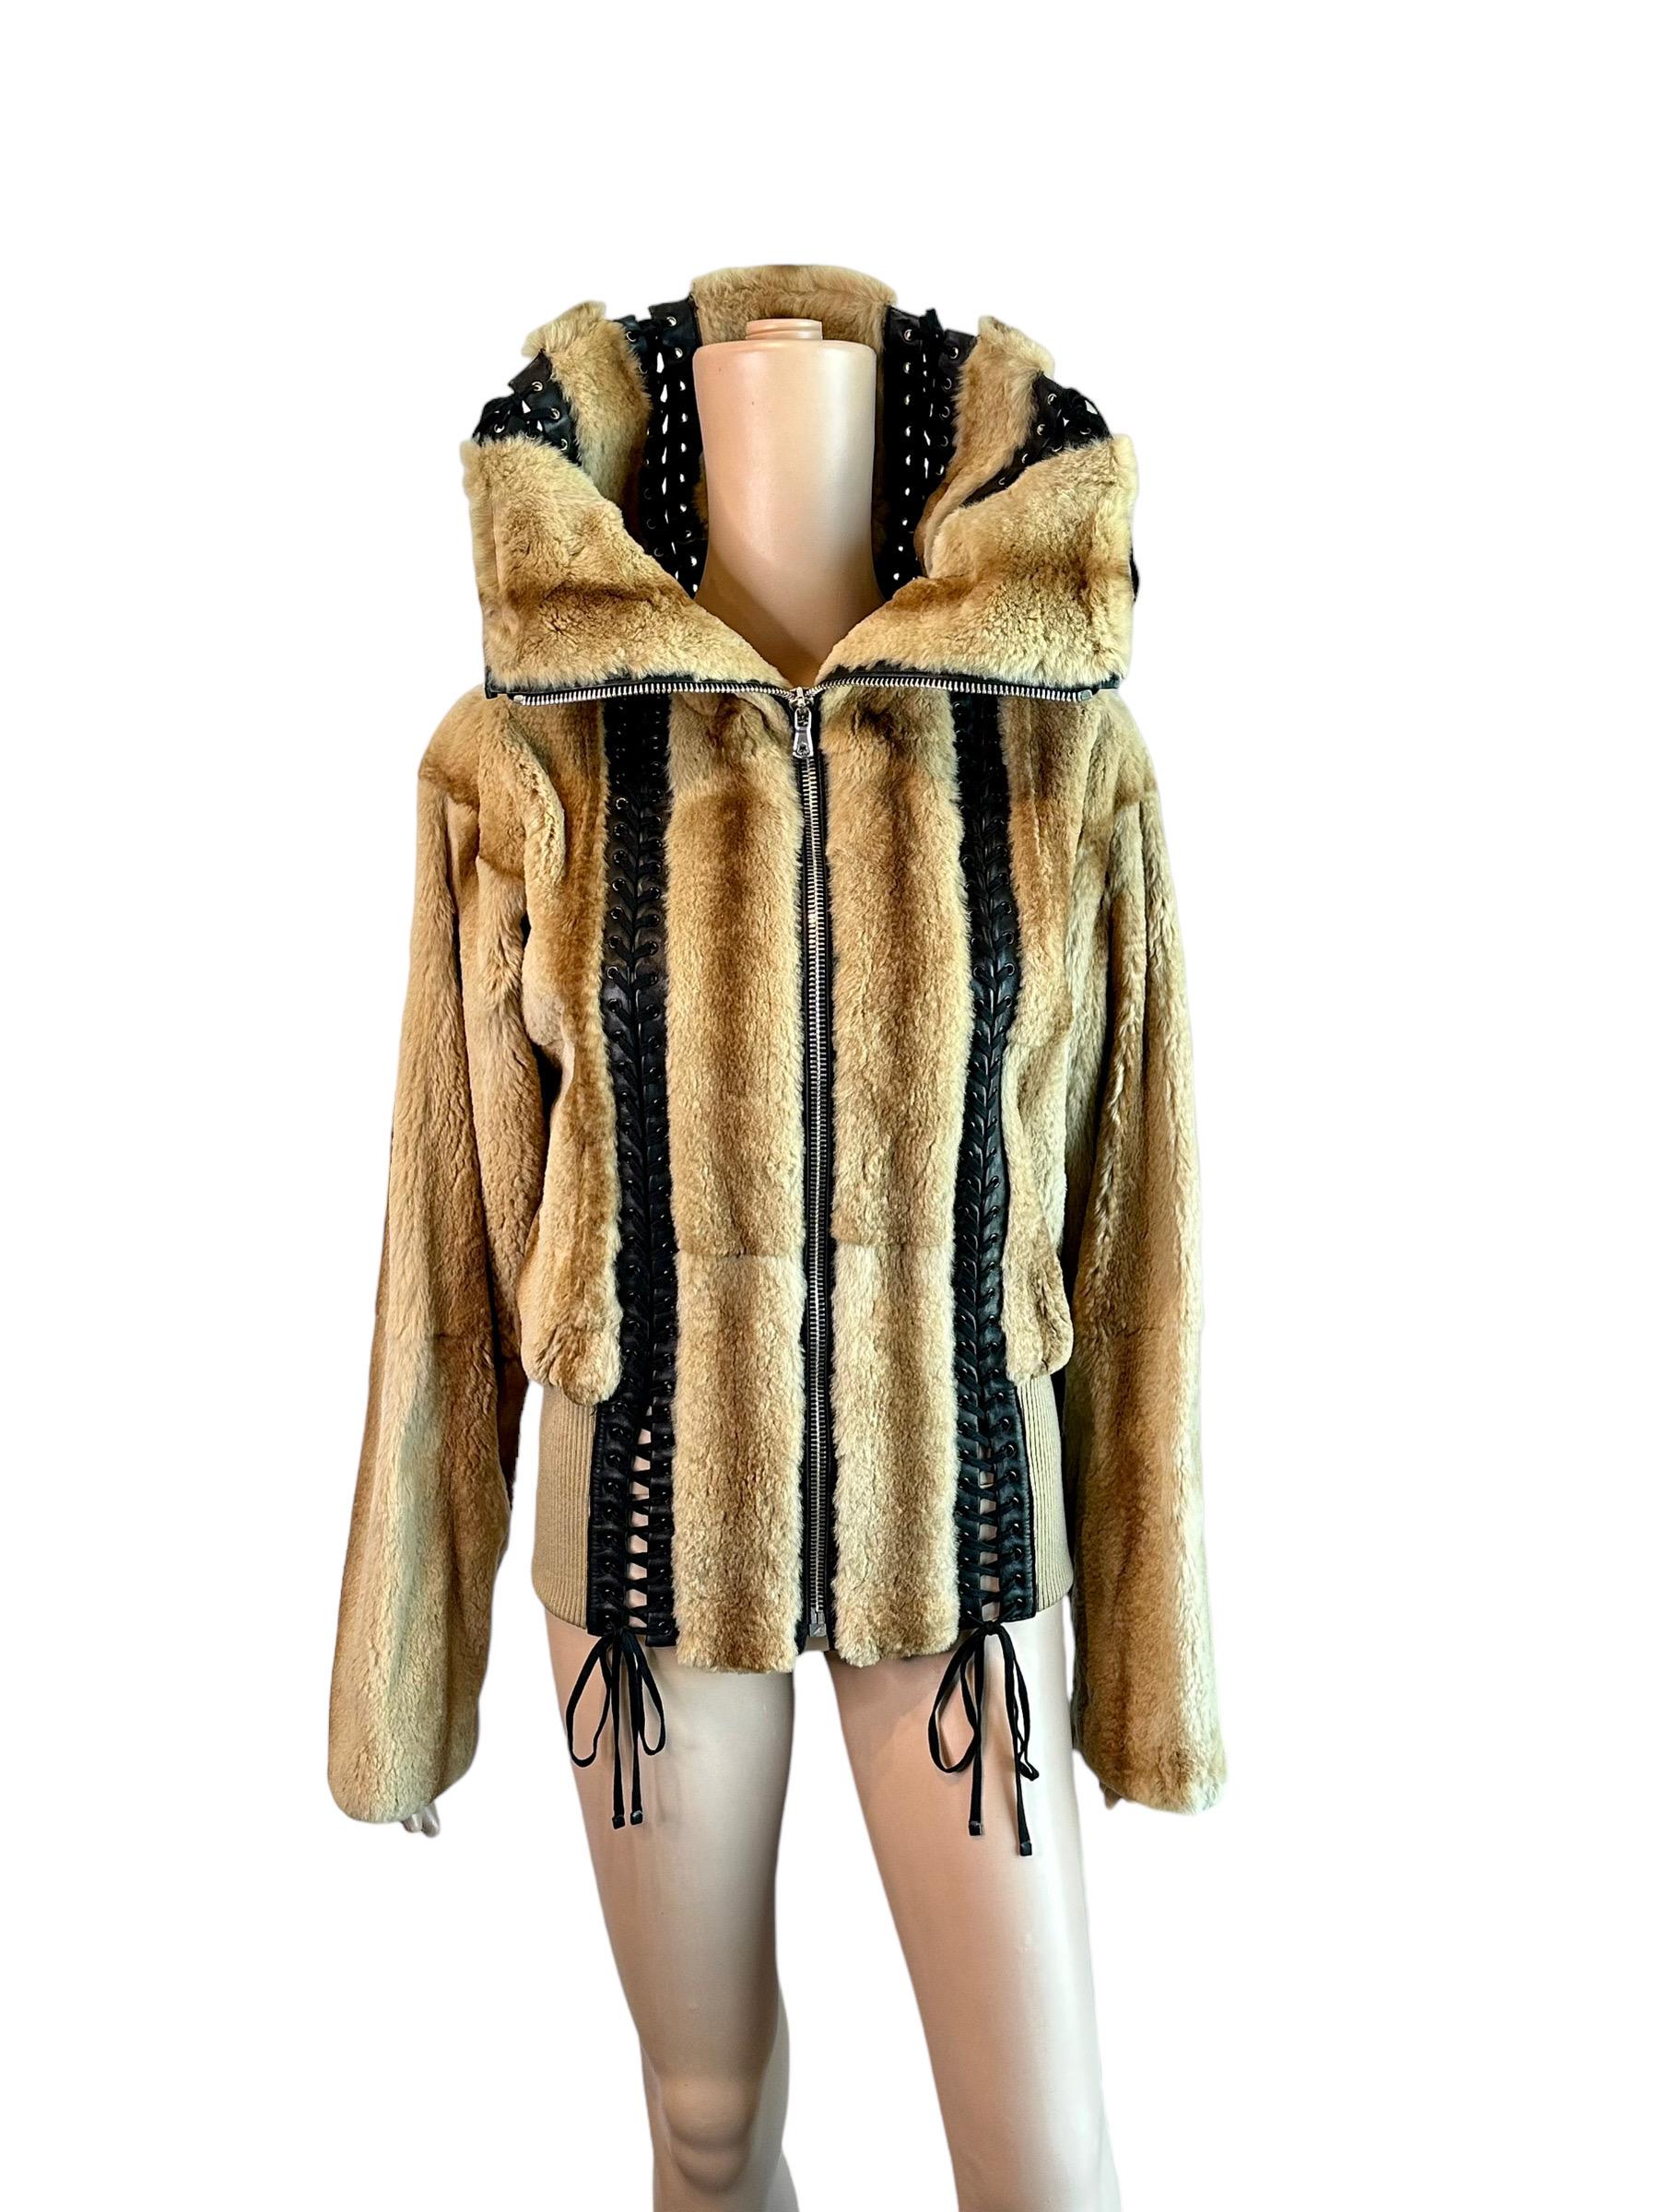 Women's Dolce & Gabbana S/S 2003 Bondage Lace Up Weasel Fur Jacket Coat For Sale